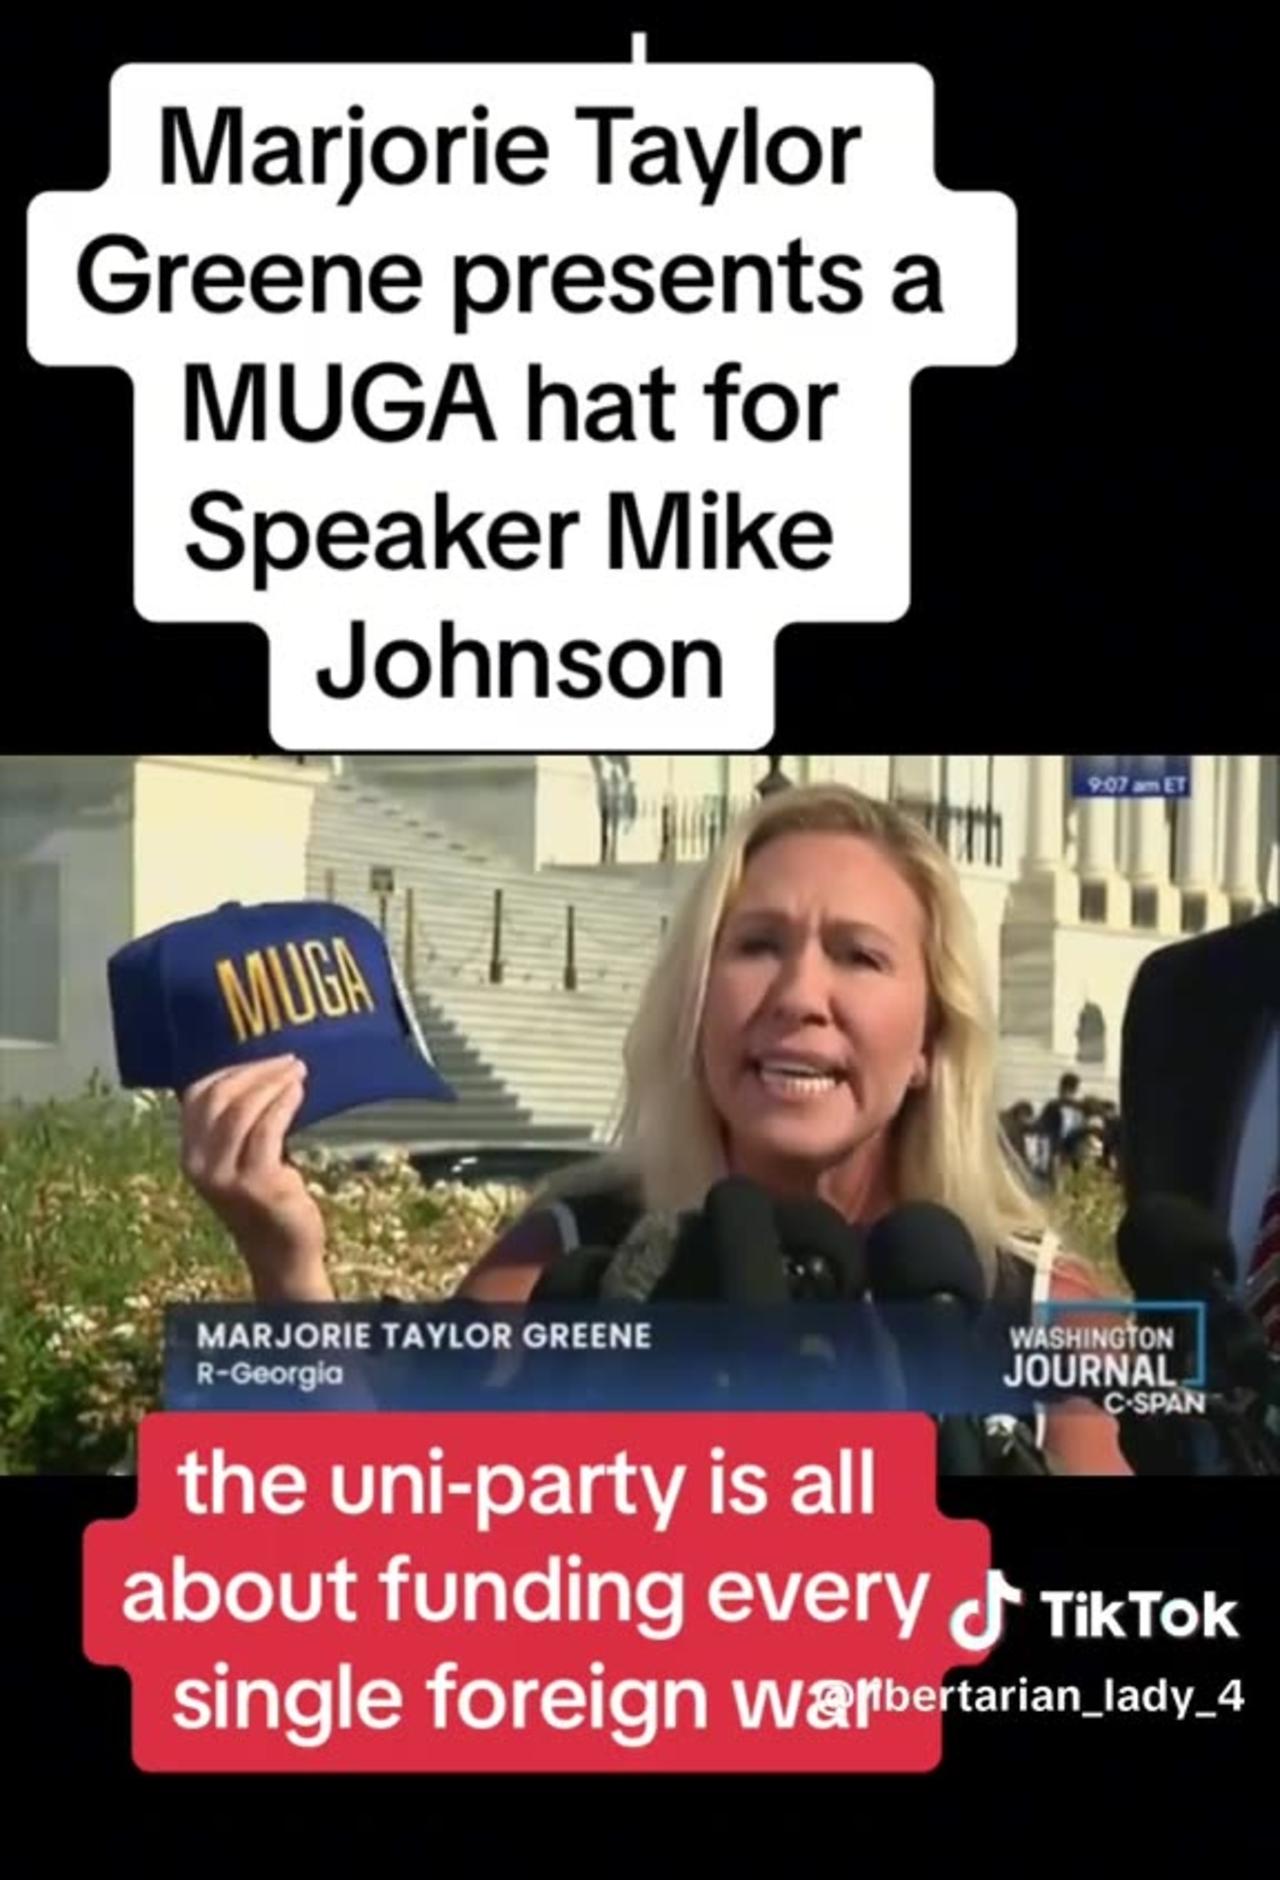 MTG presents the MUGA hat